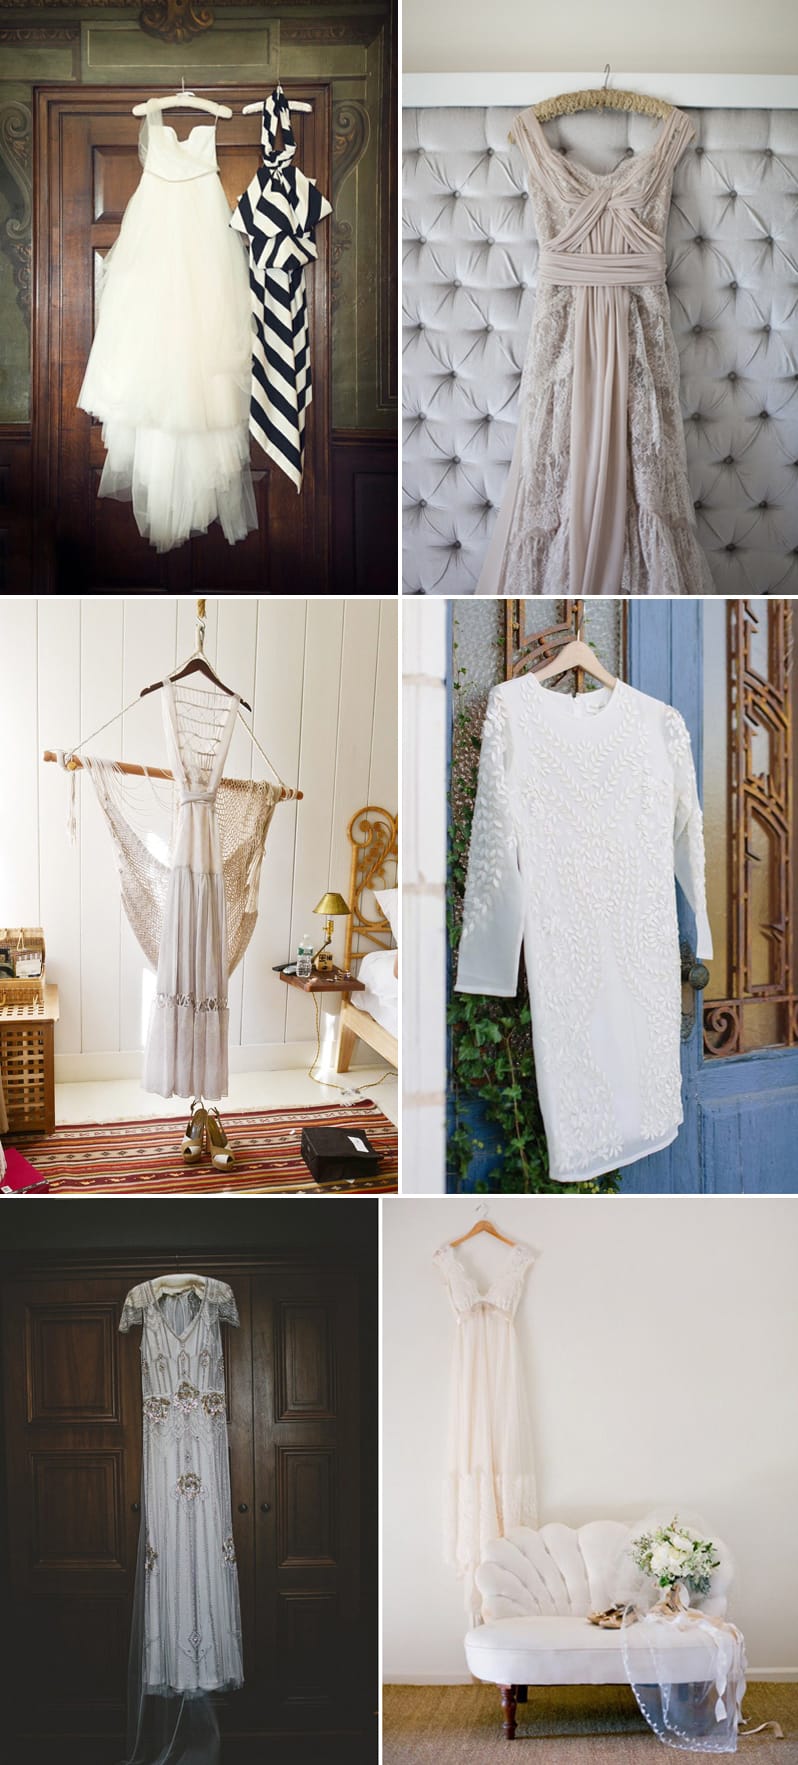 Coco Wedding Venues - Pinterest Peek - The Dress Shot.